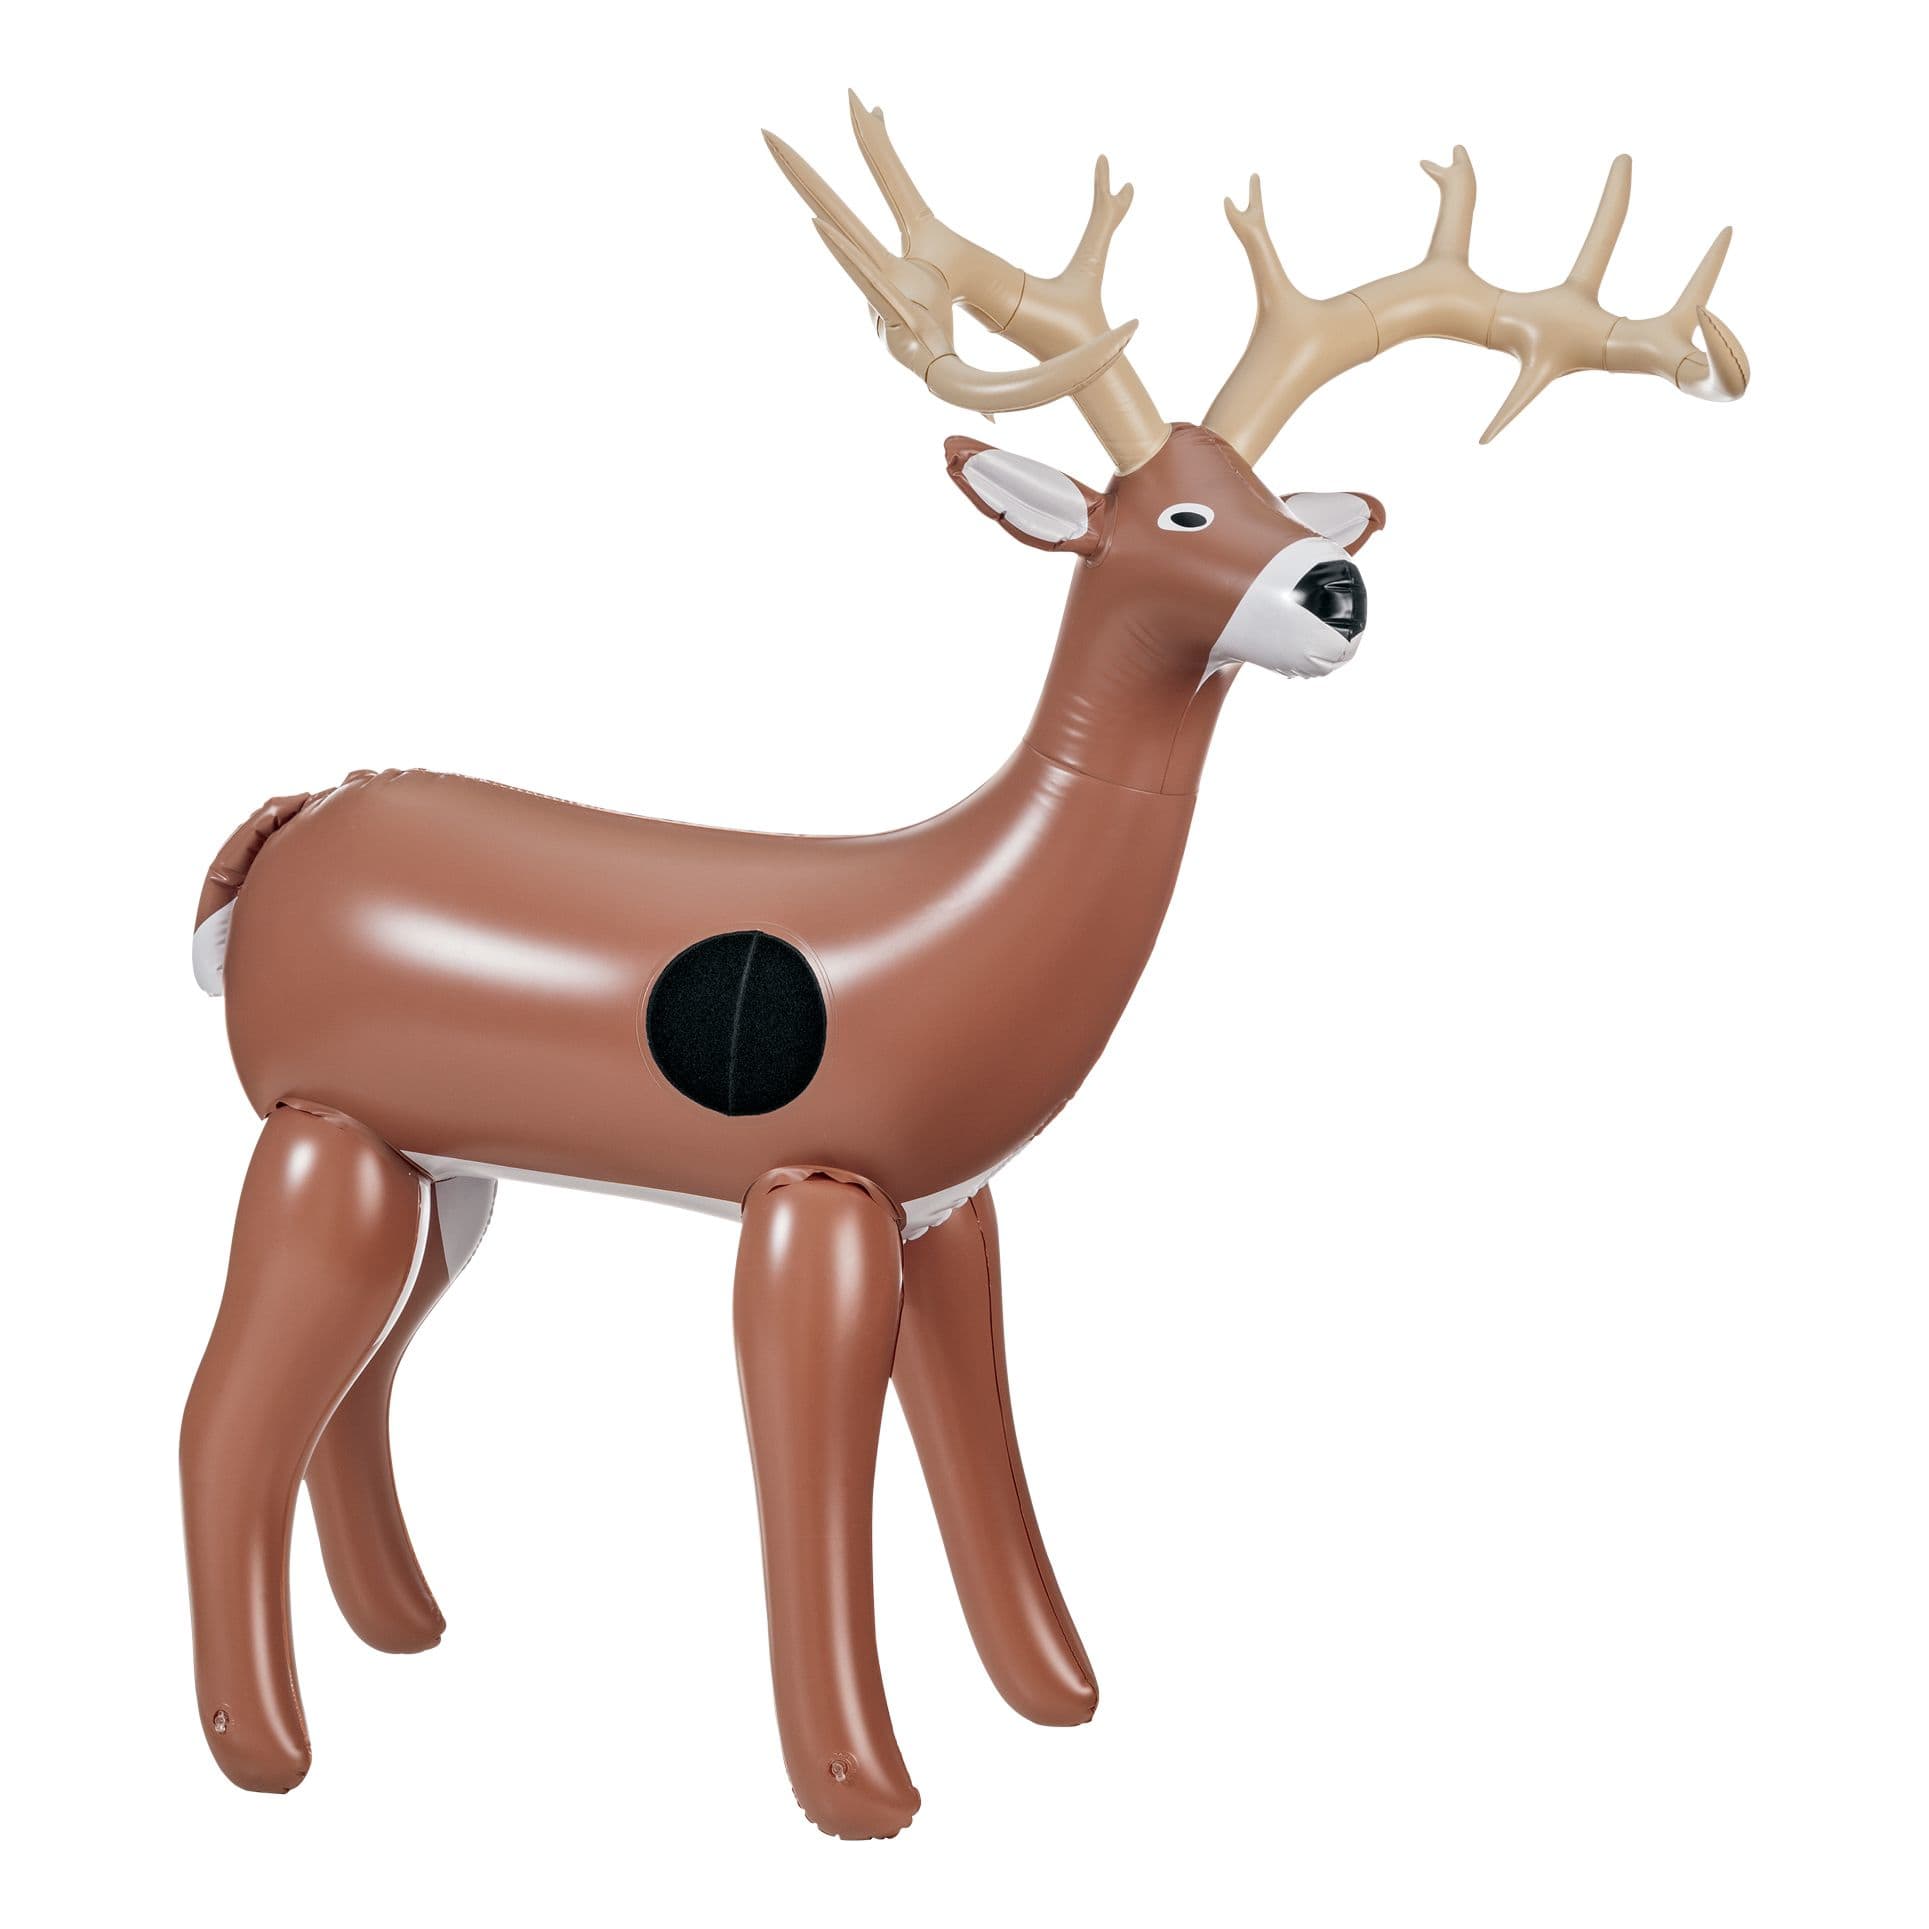 Cabela's Toy 3D Inflatable Deer Target